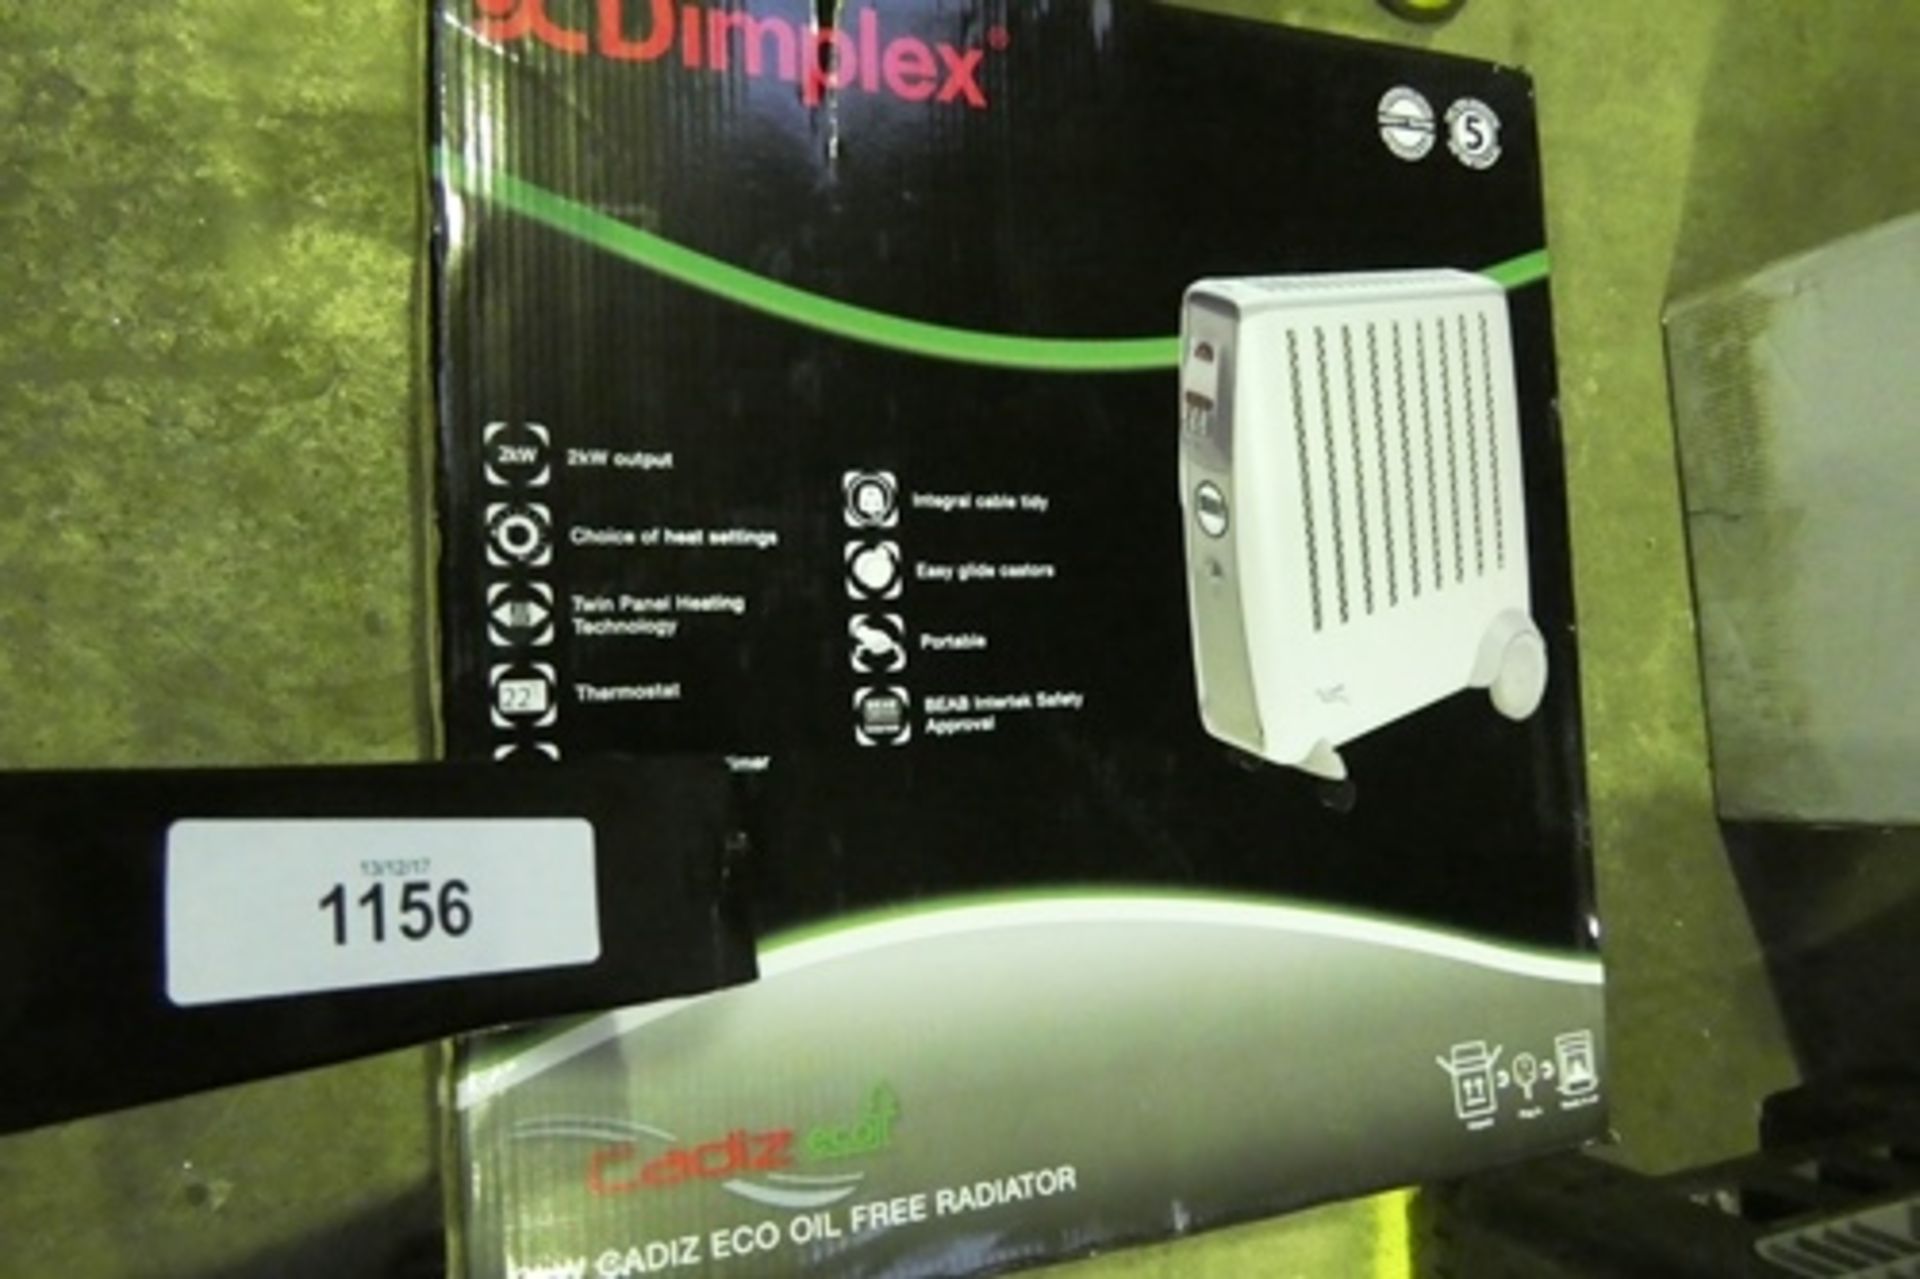 1 x Dimplex, 2KW Cadiz, Eco oil free radiator, built in timer, Model CDE2Ti - Sealed new in box (